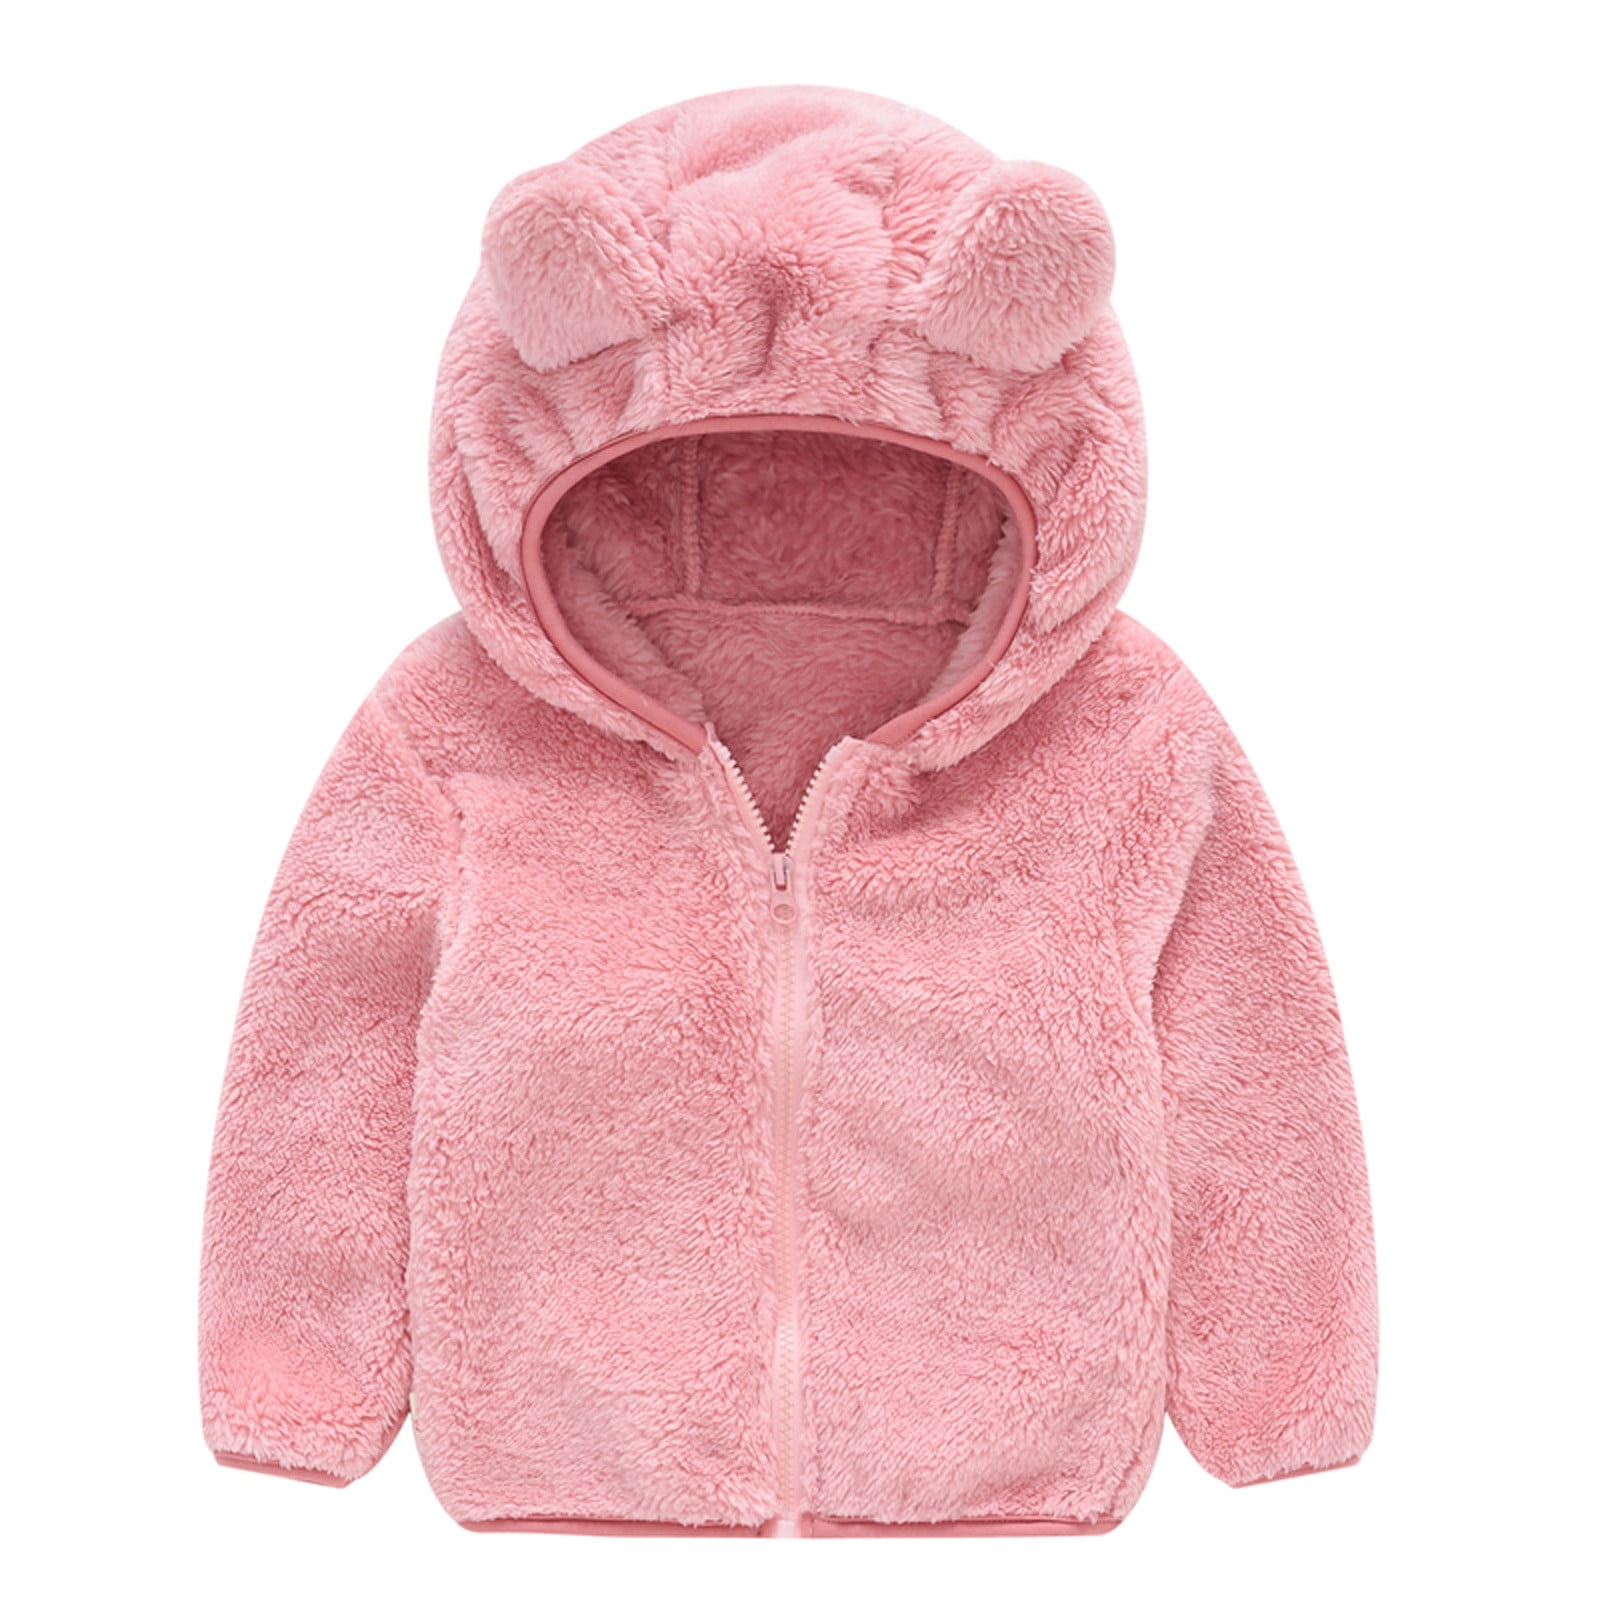 Baby Girls Boys Fleece Hoodies Jacket Coat Toddler Kids Zip Casual Sweatshirt Warm Outwear Windbreaker